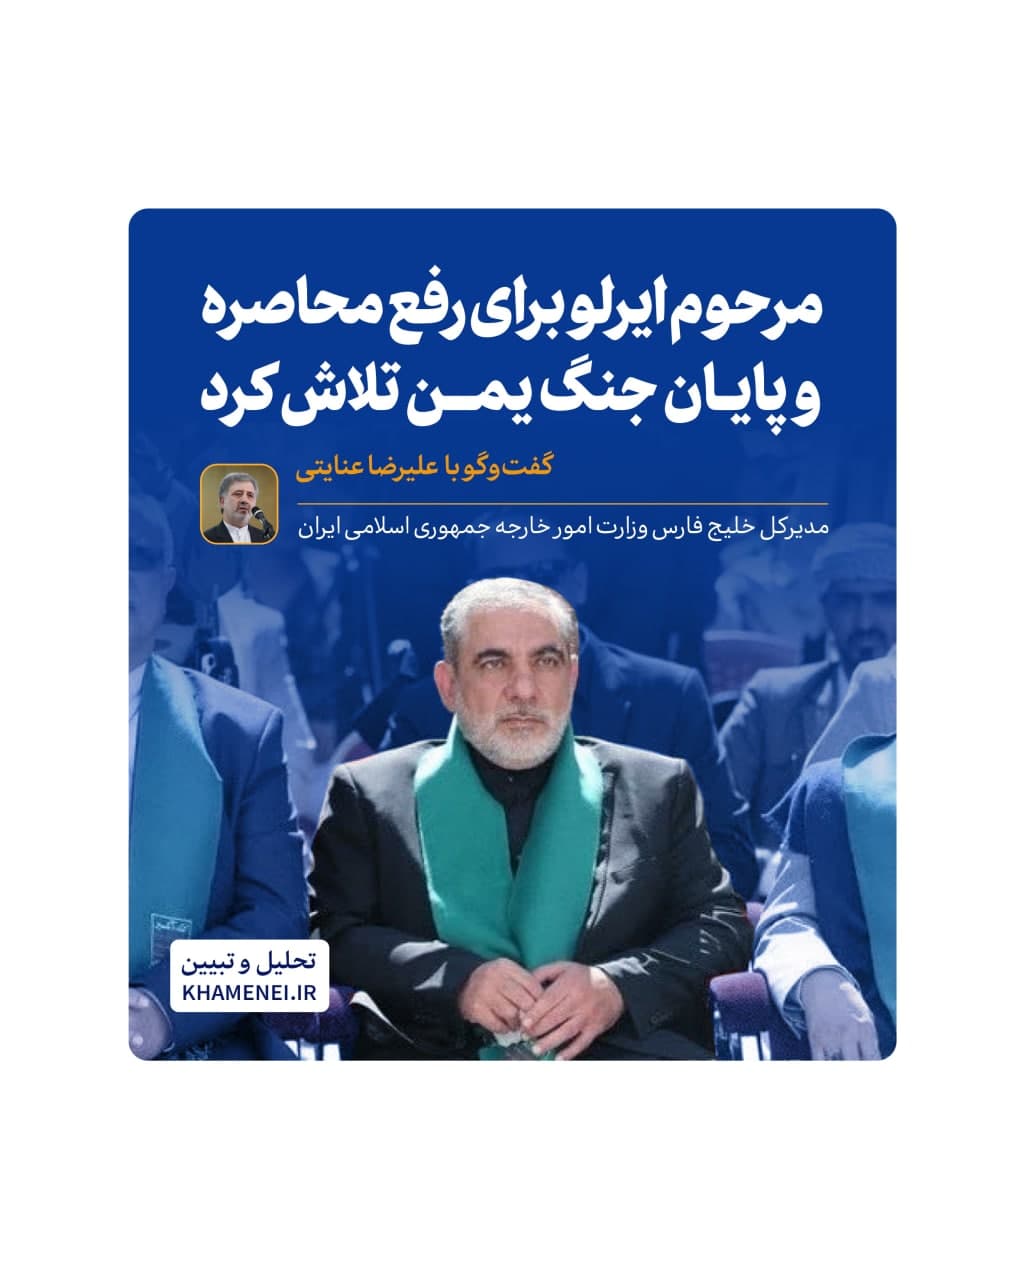 https://idc0-cdn0.khamenei.ir/ndata/news/49223/photo_2021-12-24_15-00-24.jpg